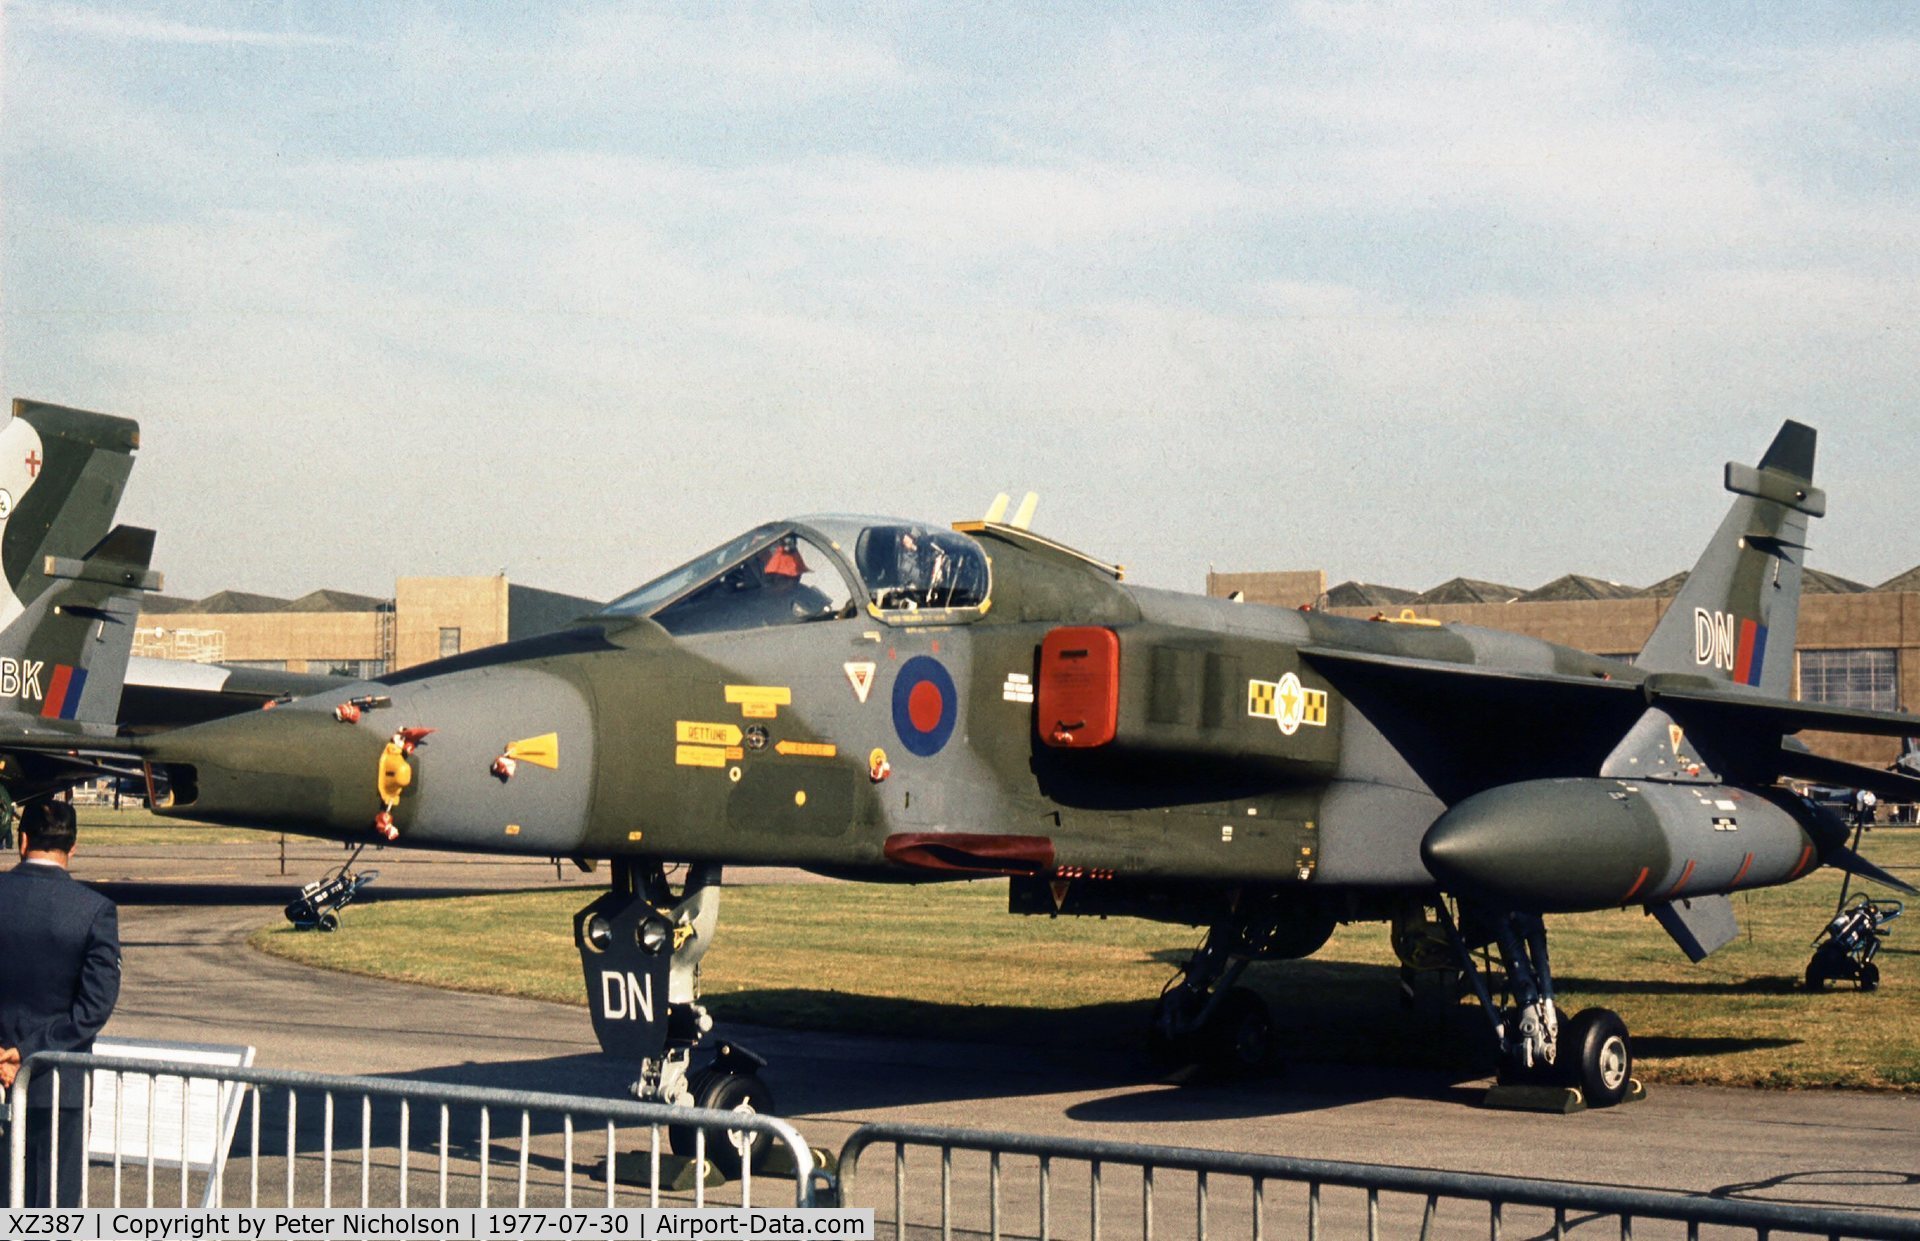 XZ387, 1977 Sepecat Jaguar GR.1 C/N S.152, Jaguar GR.1 of 31 Squadron on display at the 1977 Royal Review at RAF Finningley.